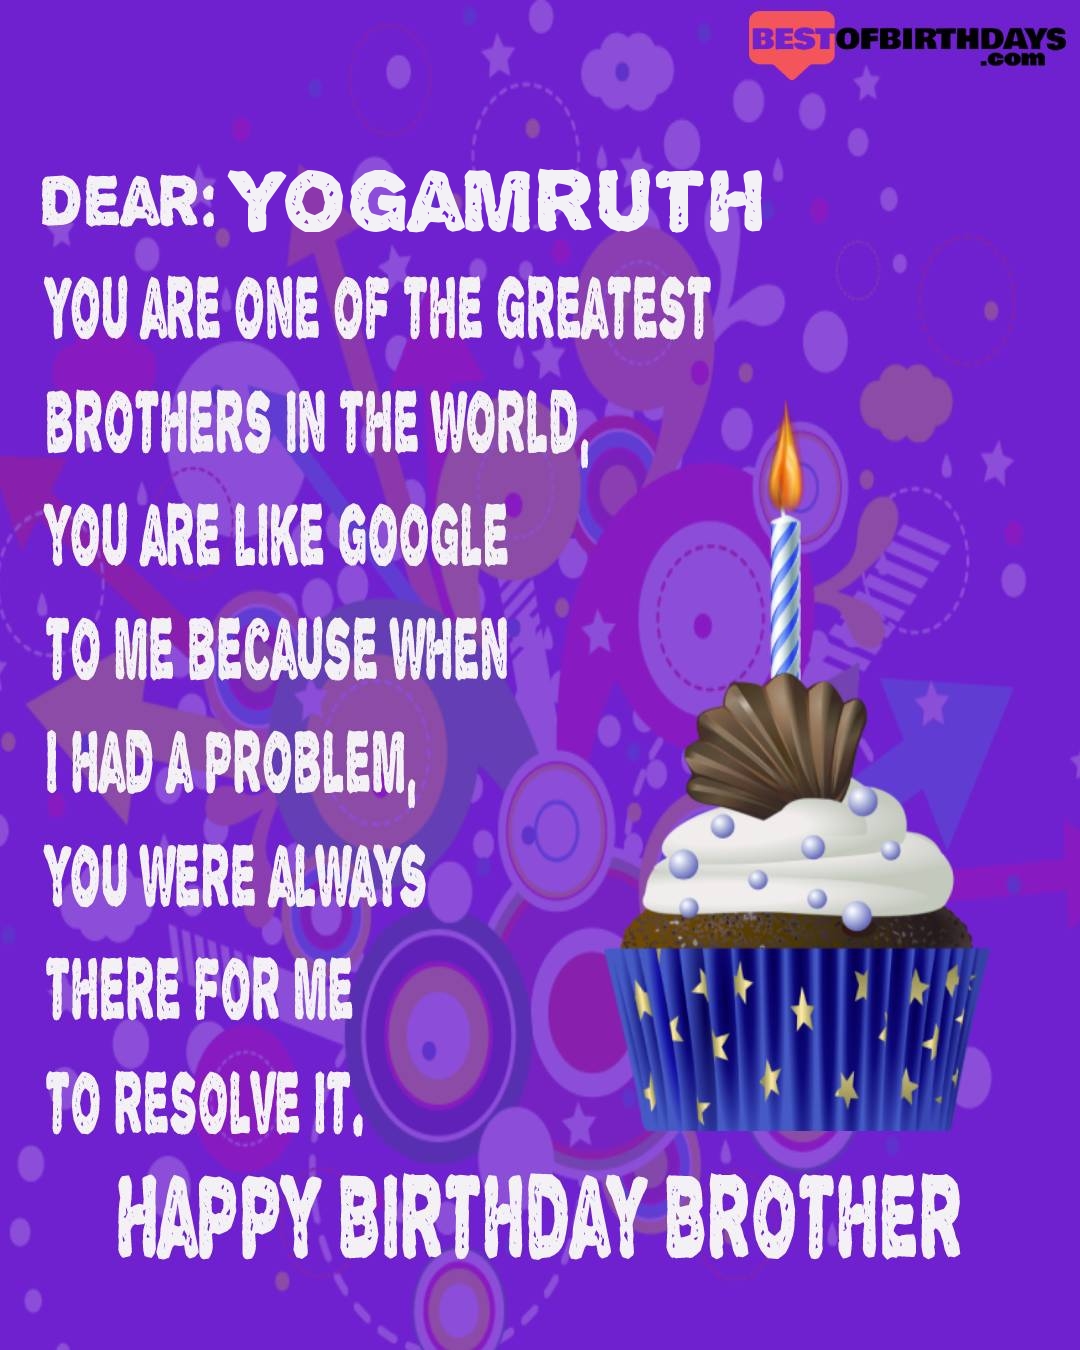 Happy birthday yogamruth bhai brother bro